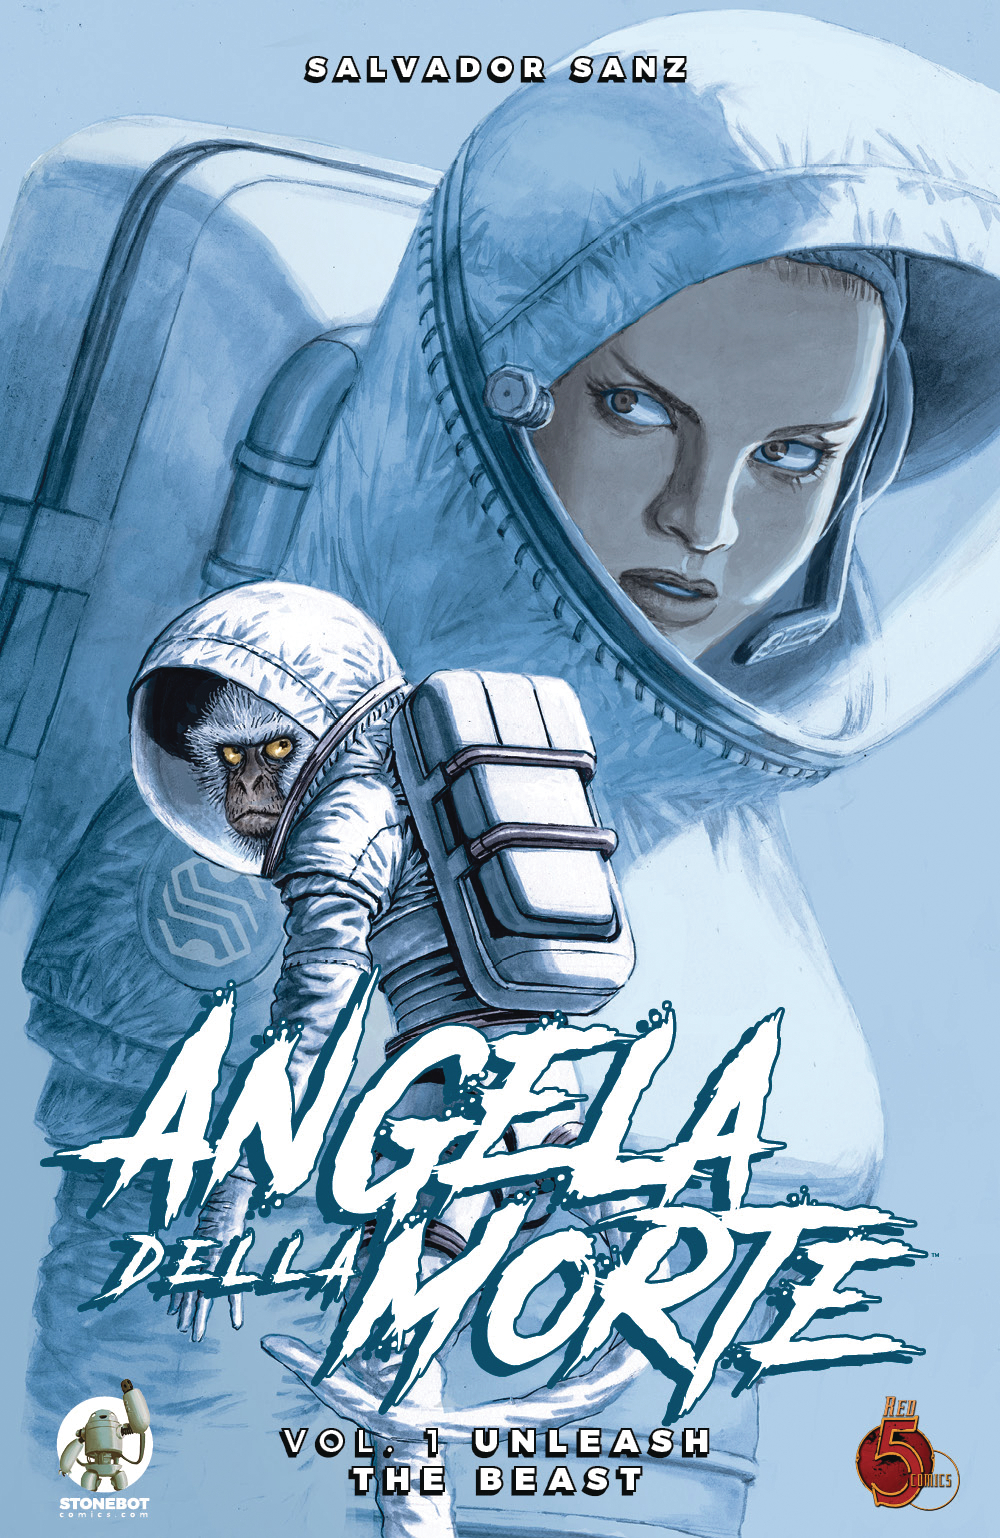 Angela Della Morte Graphic Novel Volume 1 Unleash the Beast